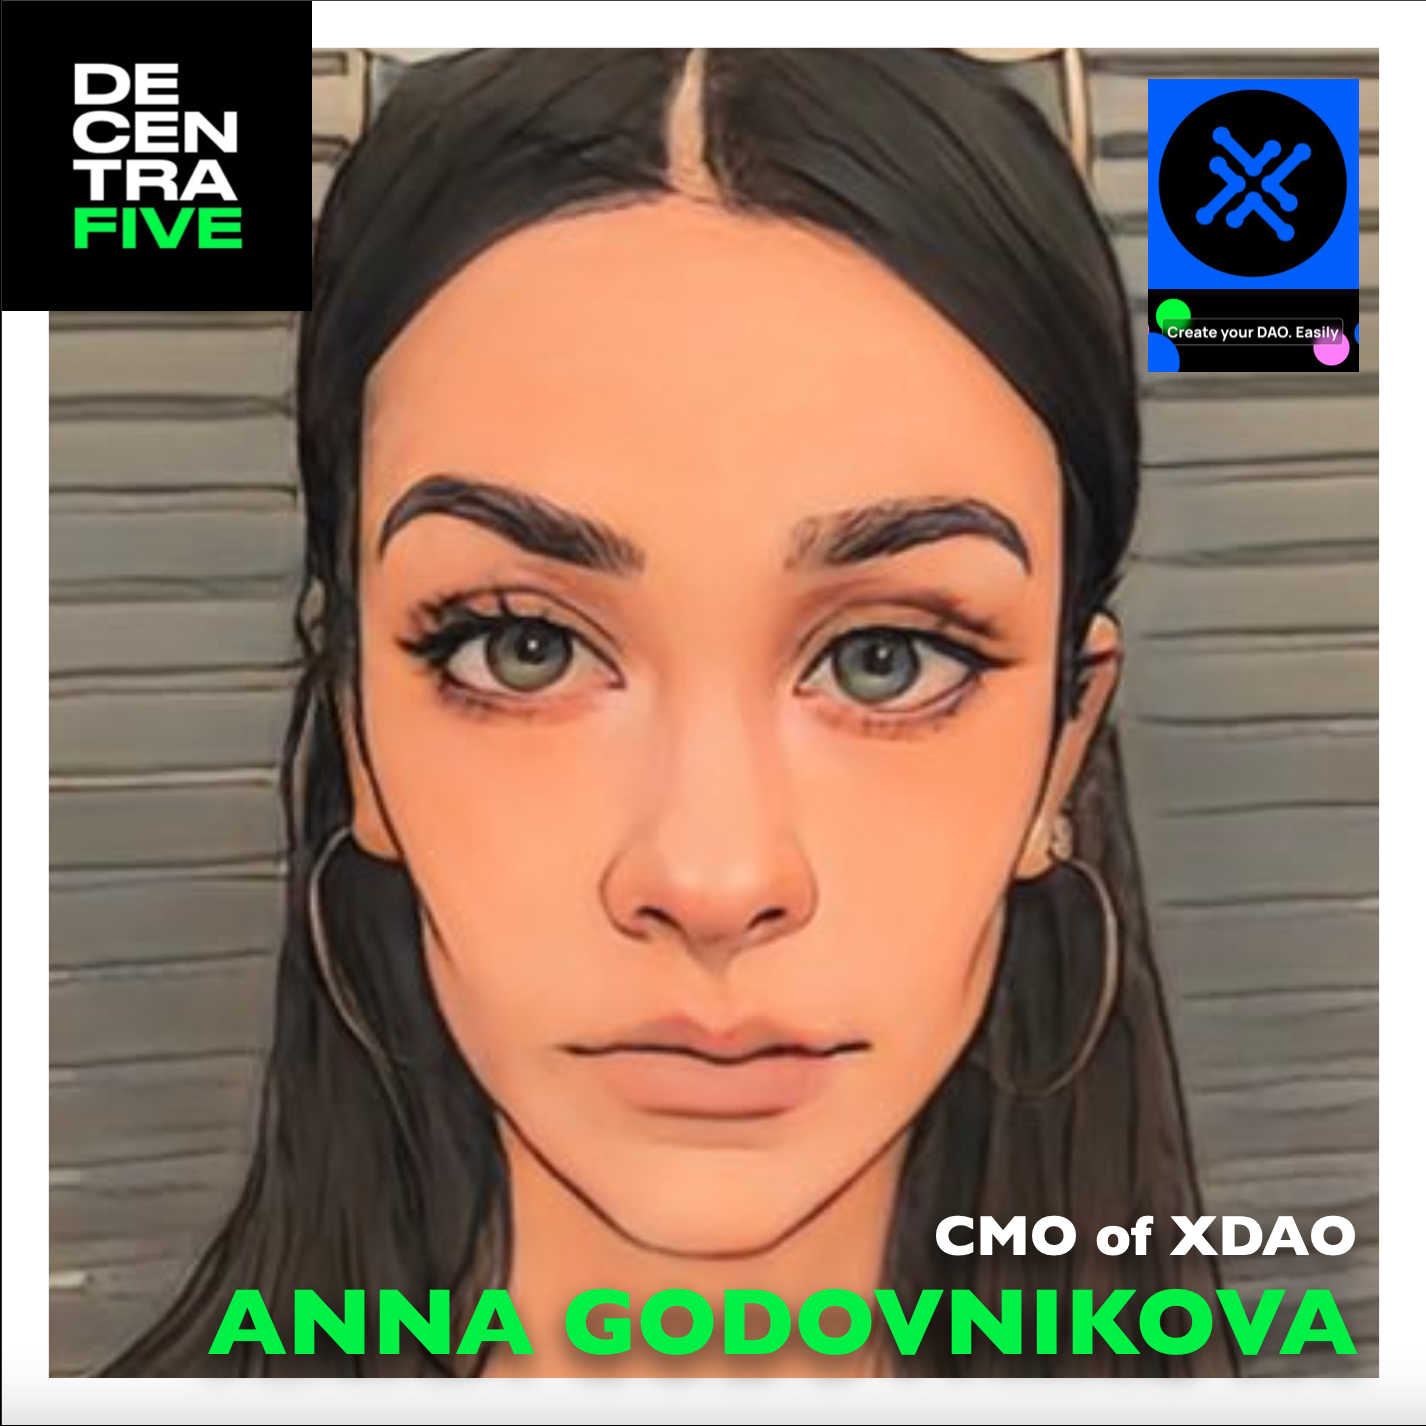 Anna Godovnikova (@godovnikovaa), Chief Marketing Officer of @XDAOapp, on @DECENTRAFIVE | hosted by Jason Dukes (@LiveSent) Image